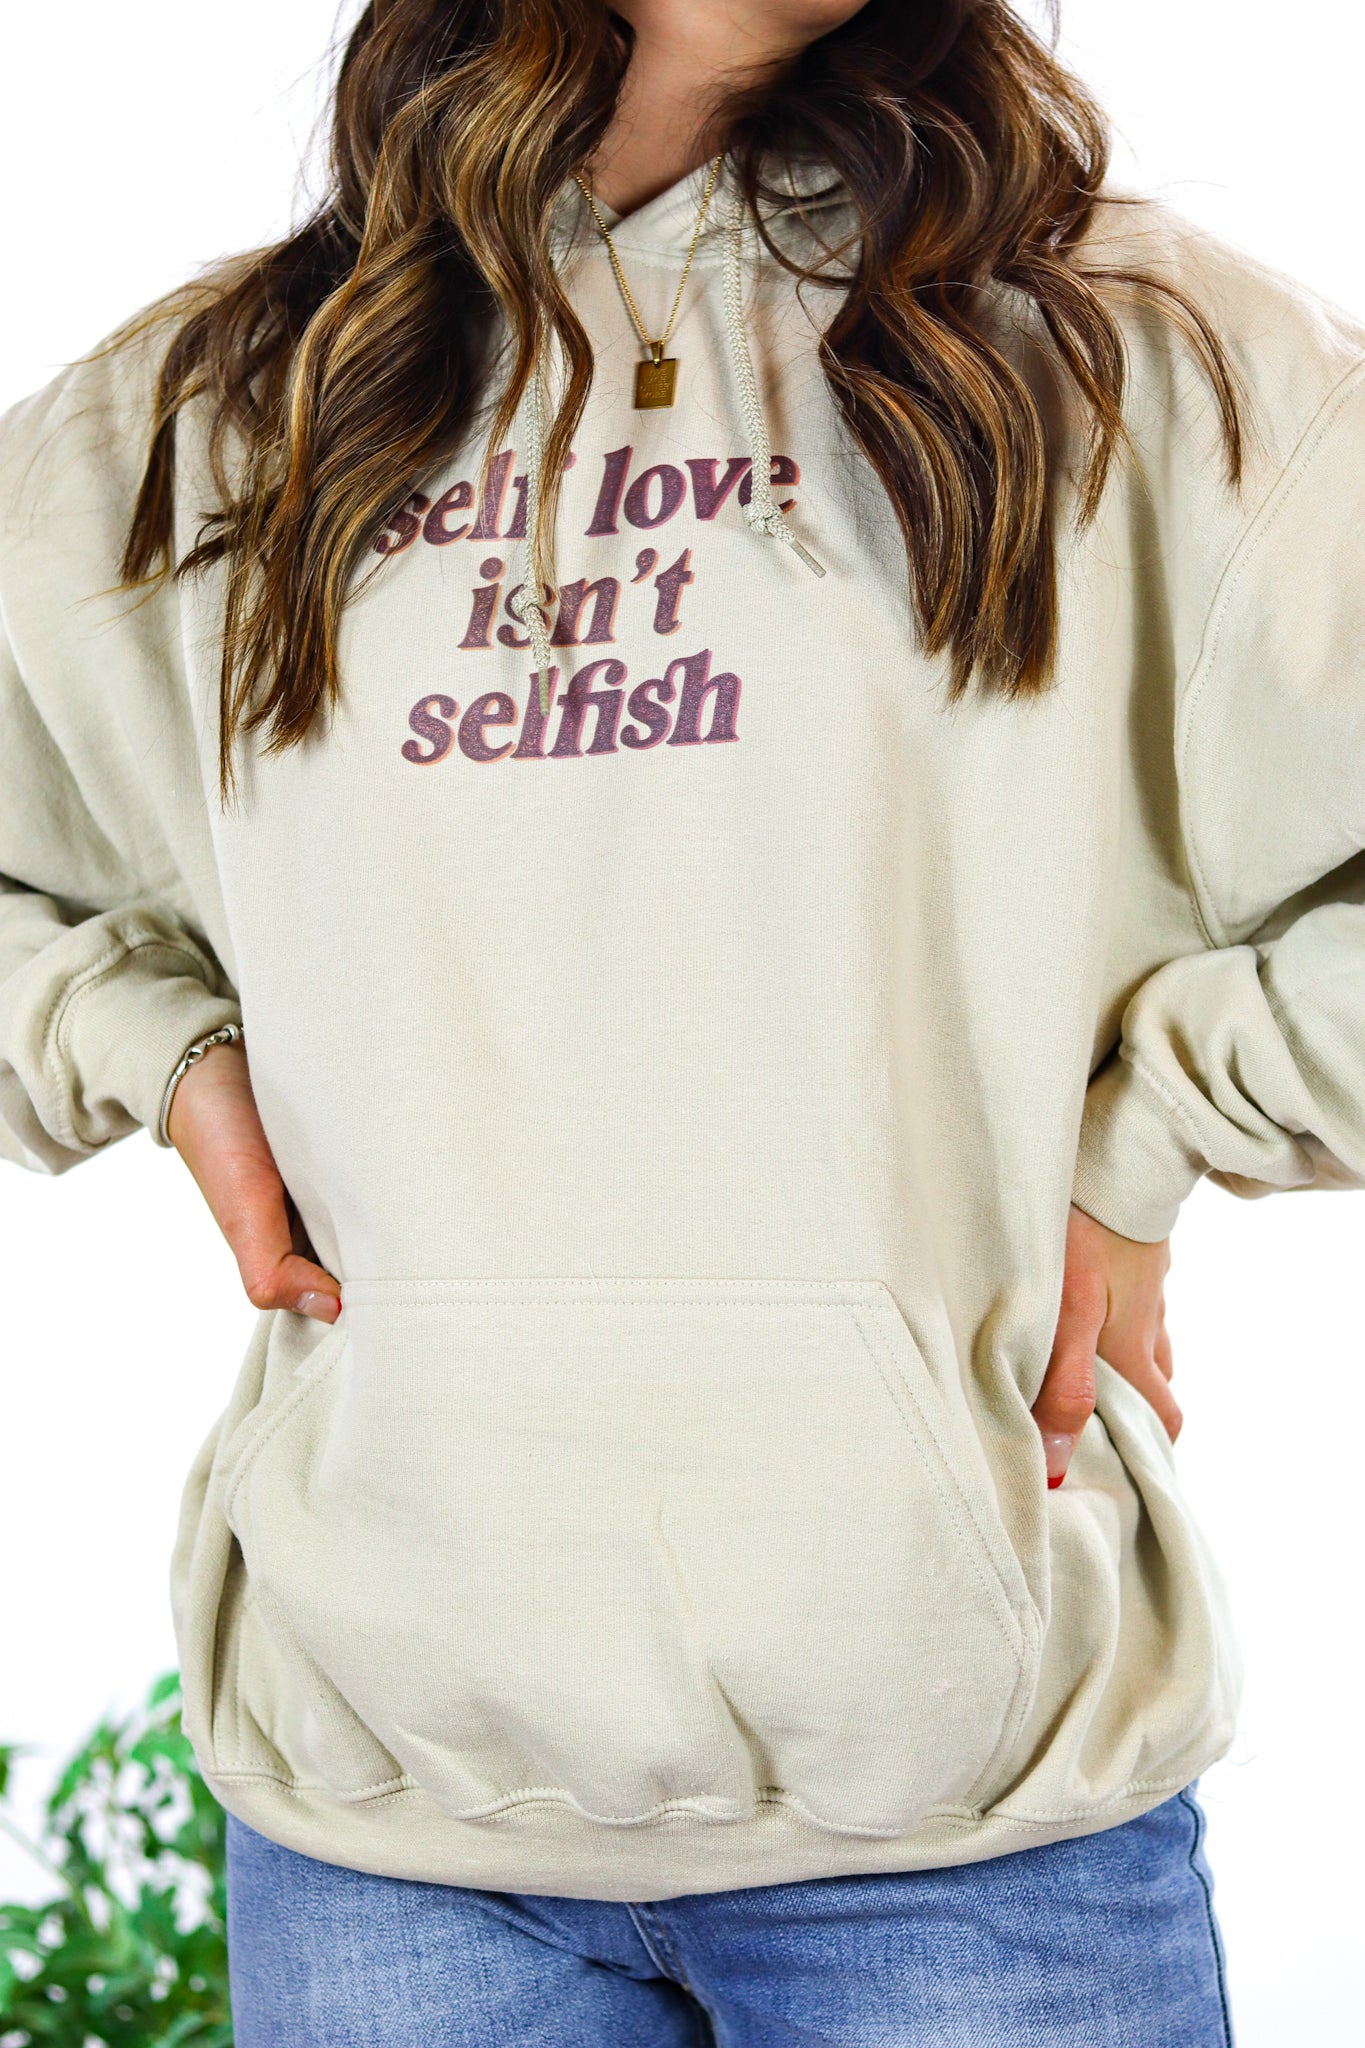 Self Love Sweatshirt